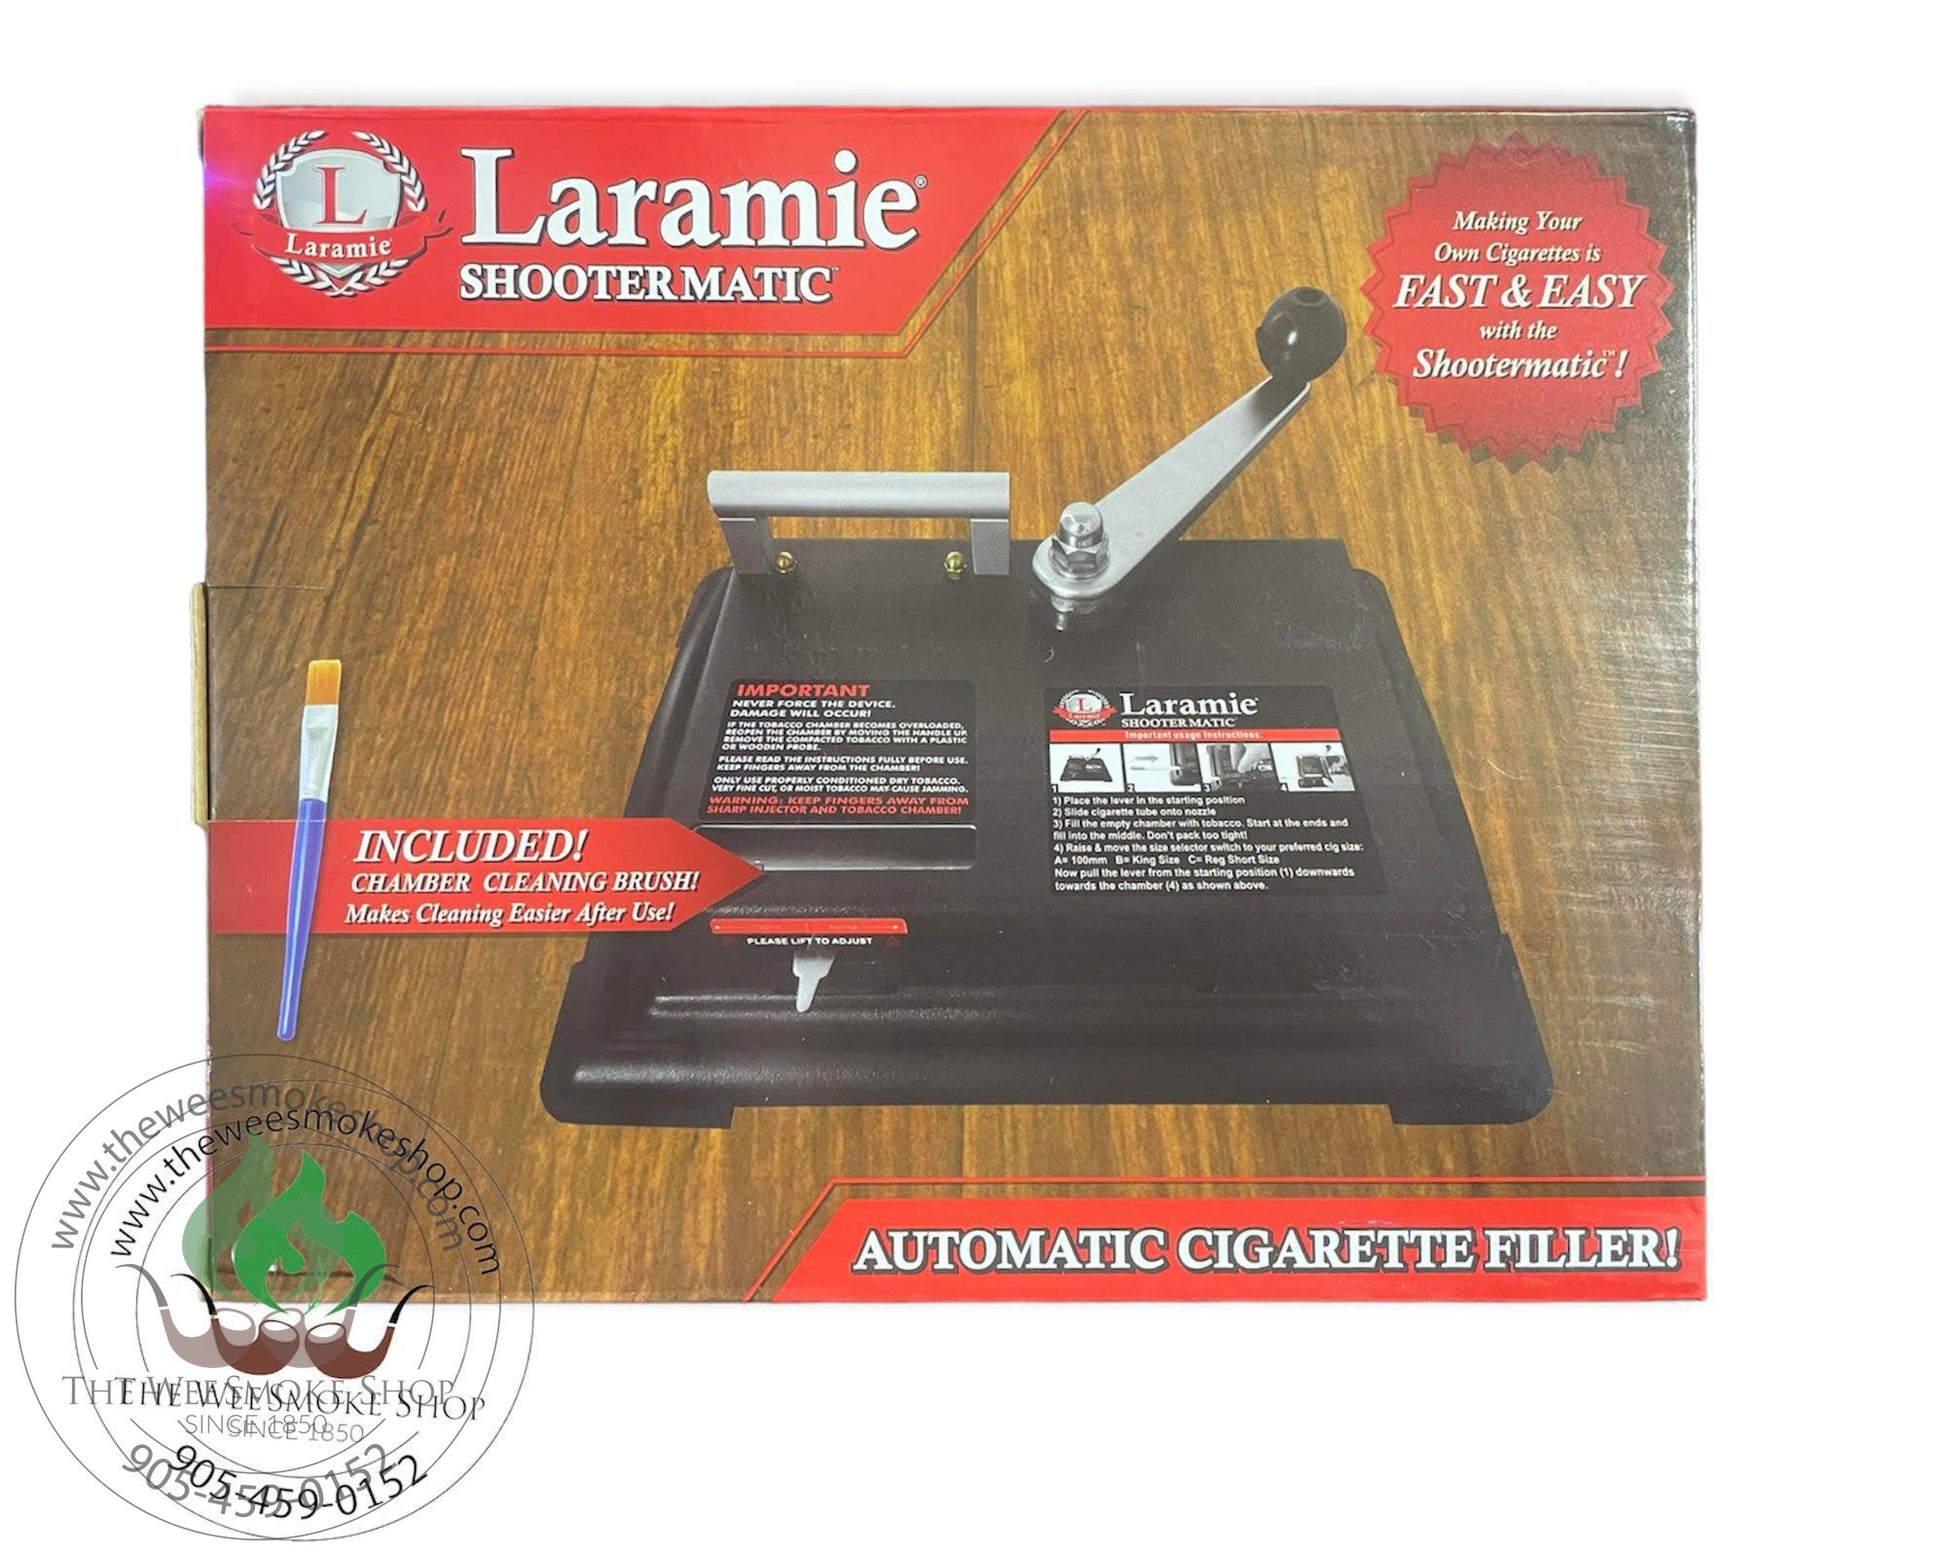 Laramie Shooter Matic - The Wee Smoke Shop